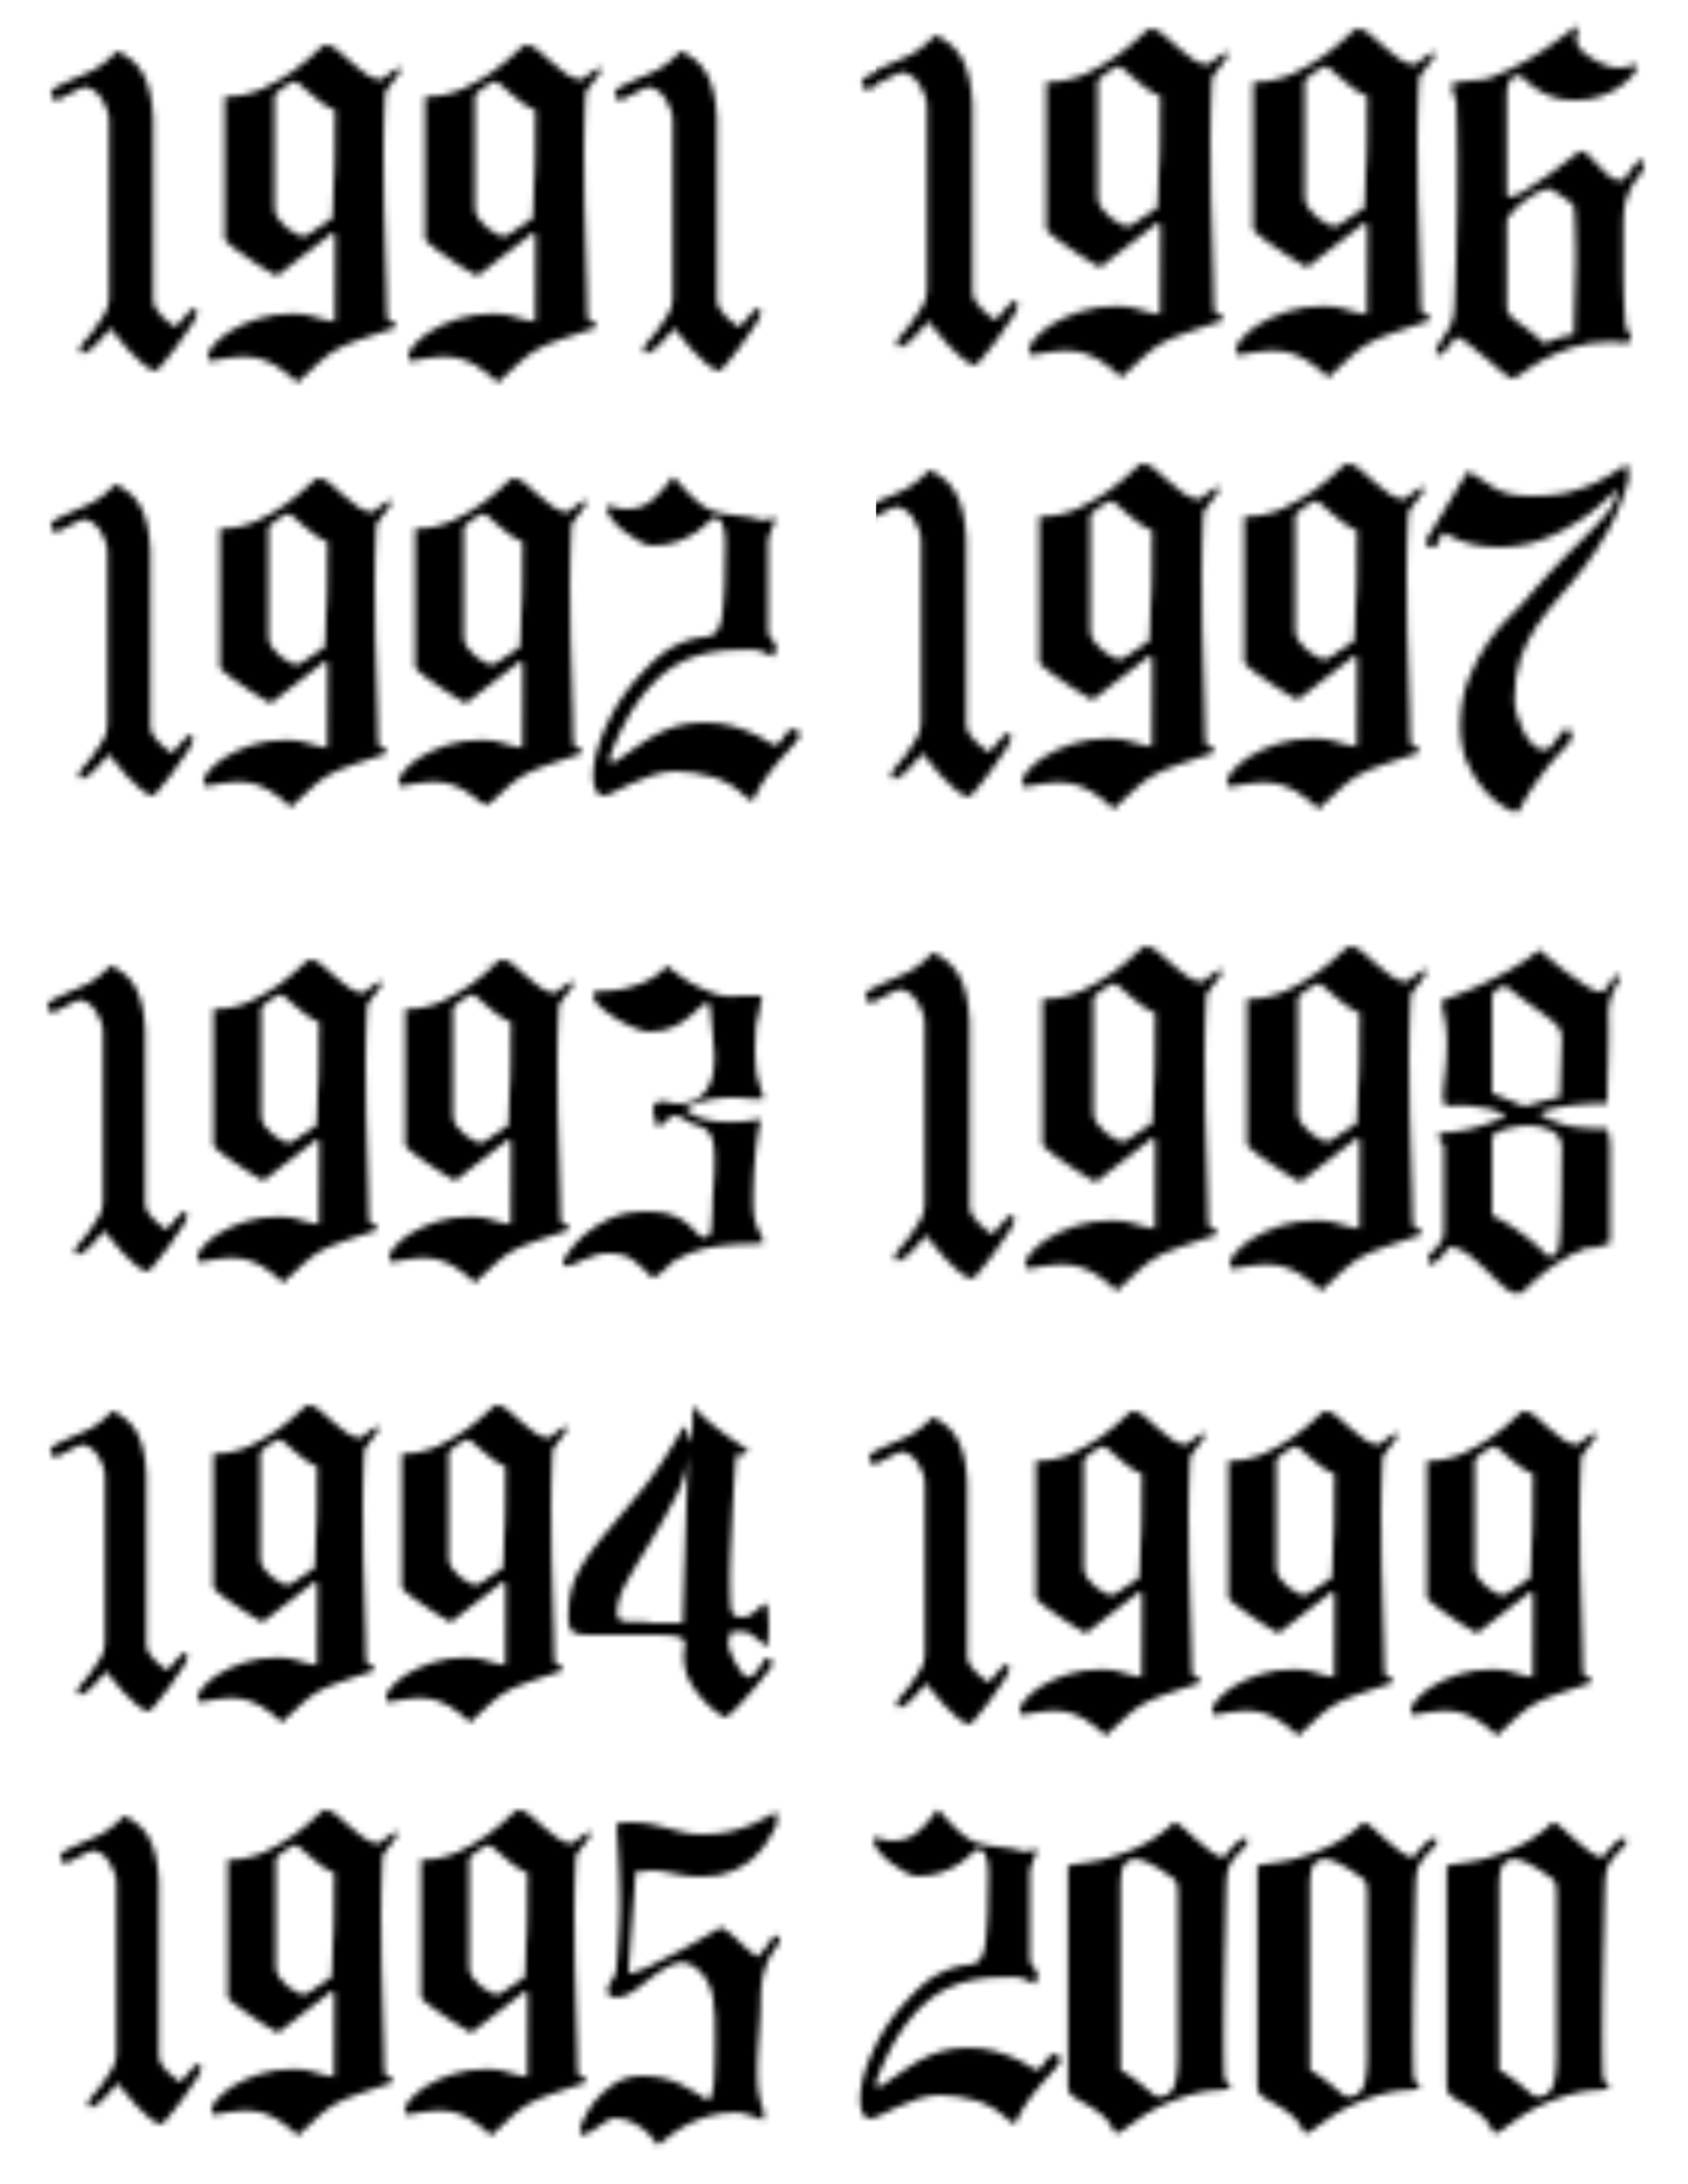 1993 Birth Year Temporary Tattoo Set of 3  Small Tattoos